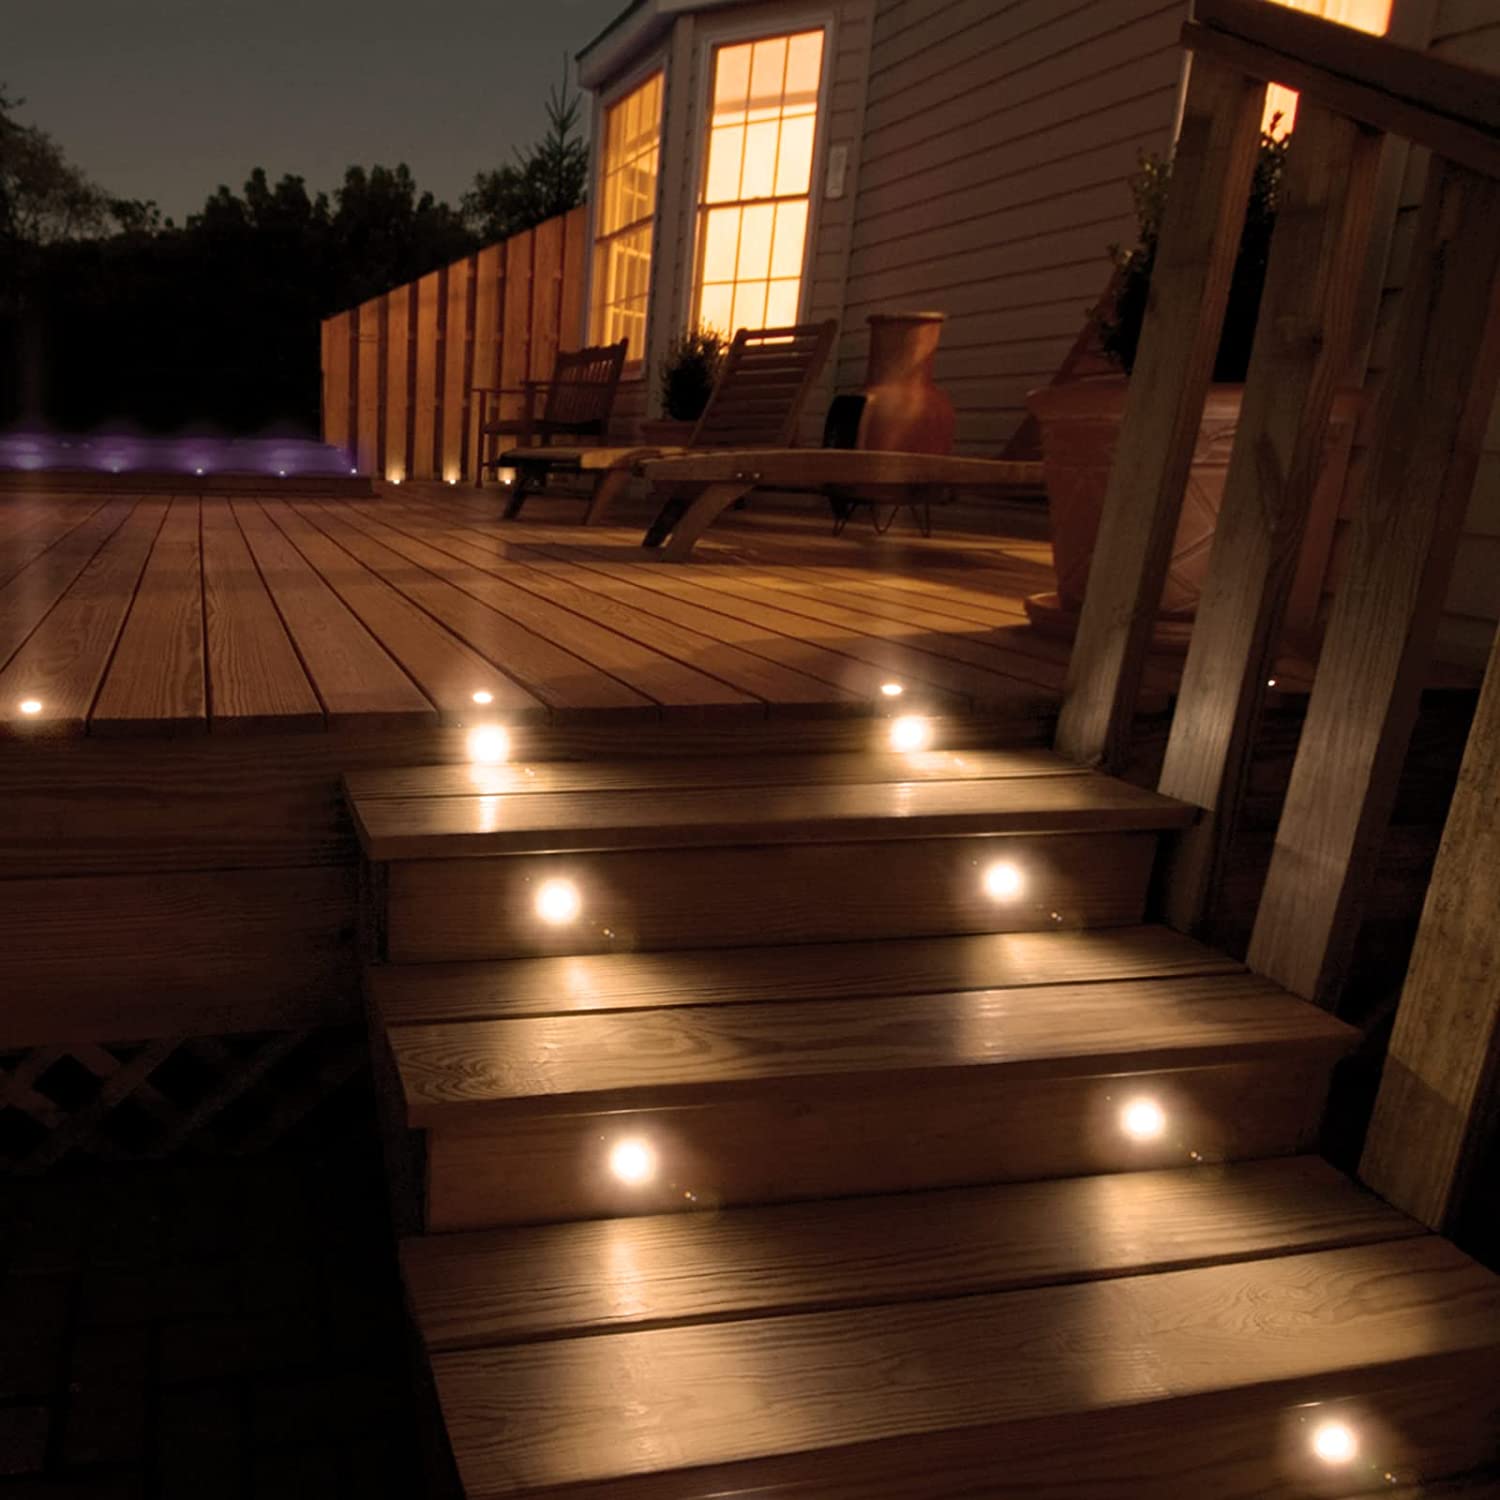 Malibu 6 PK LED Deck Lights Low Voltage Landscape Light In Ground Lighting  for Steps,Stair,Patio,Floor,Kitchen,Outdoor Led Landscape Lighting